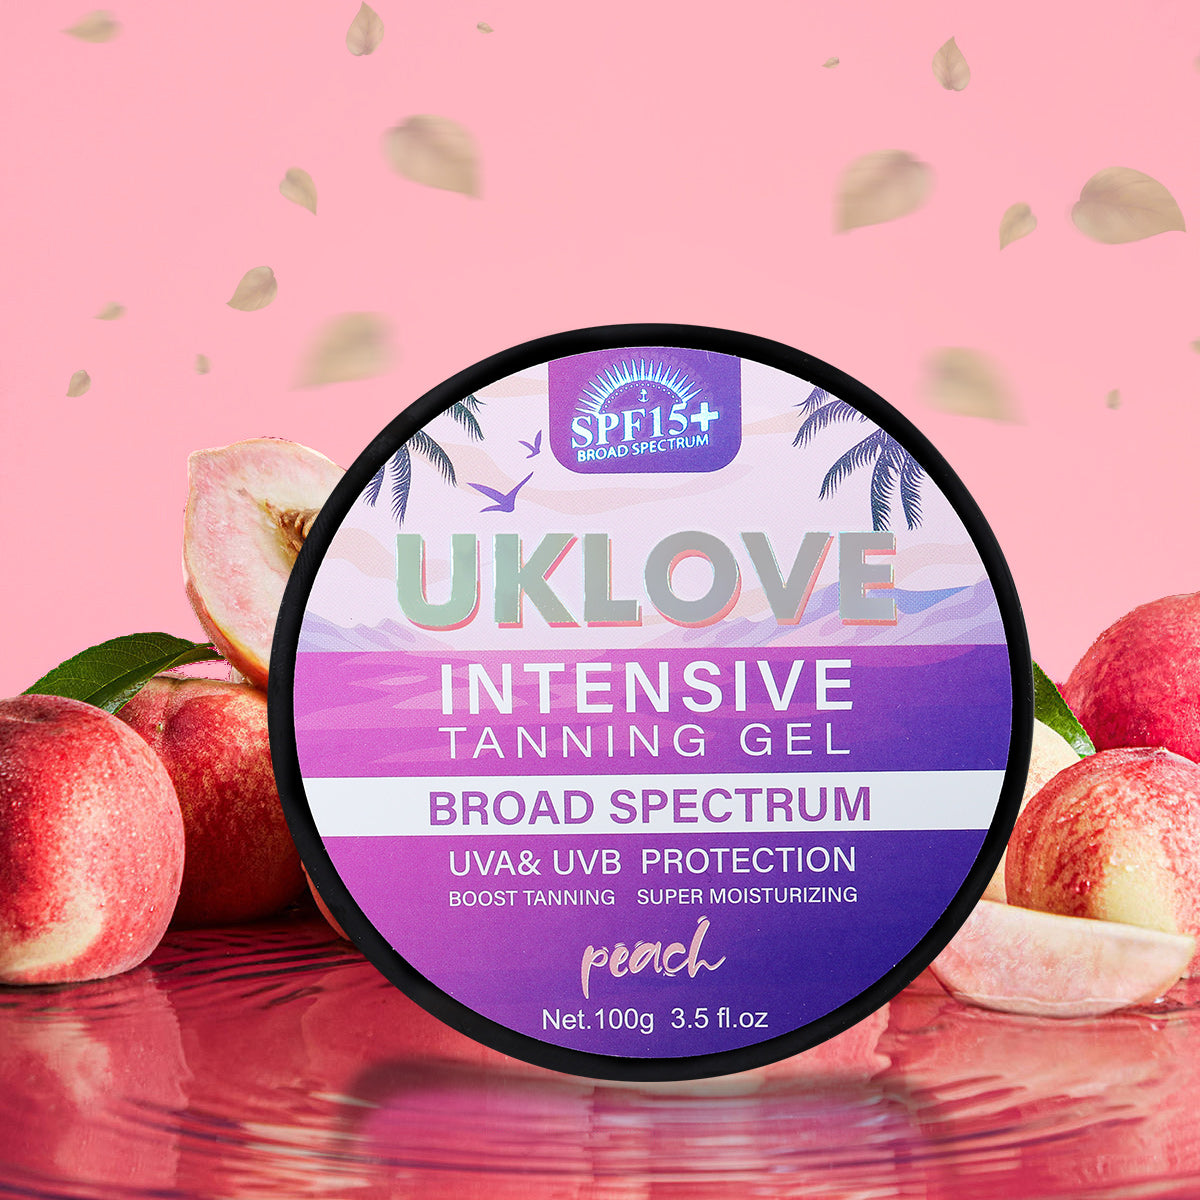 UKLOVE tanning gel SPF15+ peach fragrance intensive boost tanning